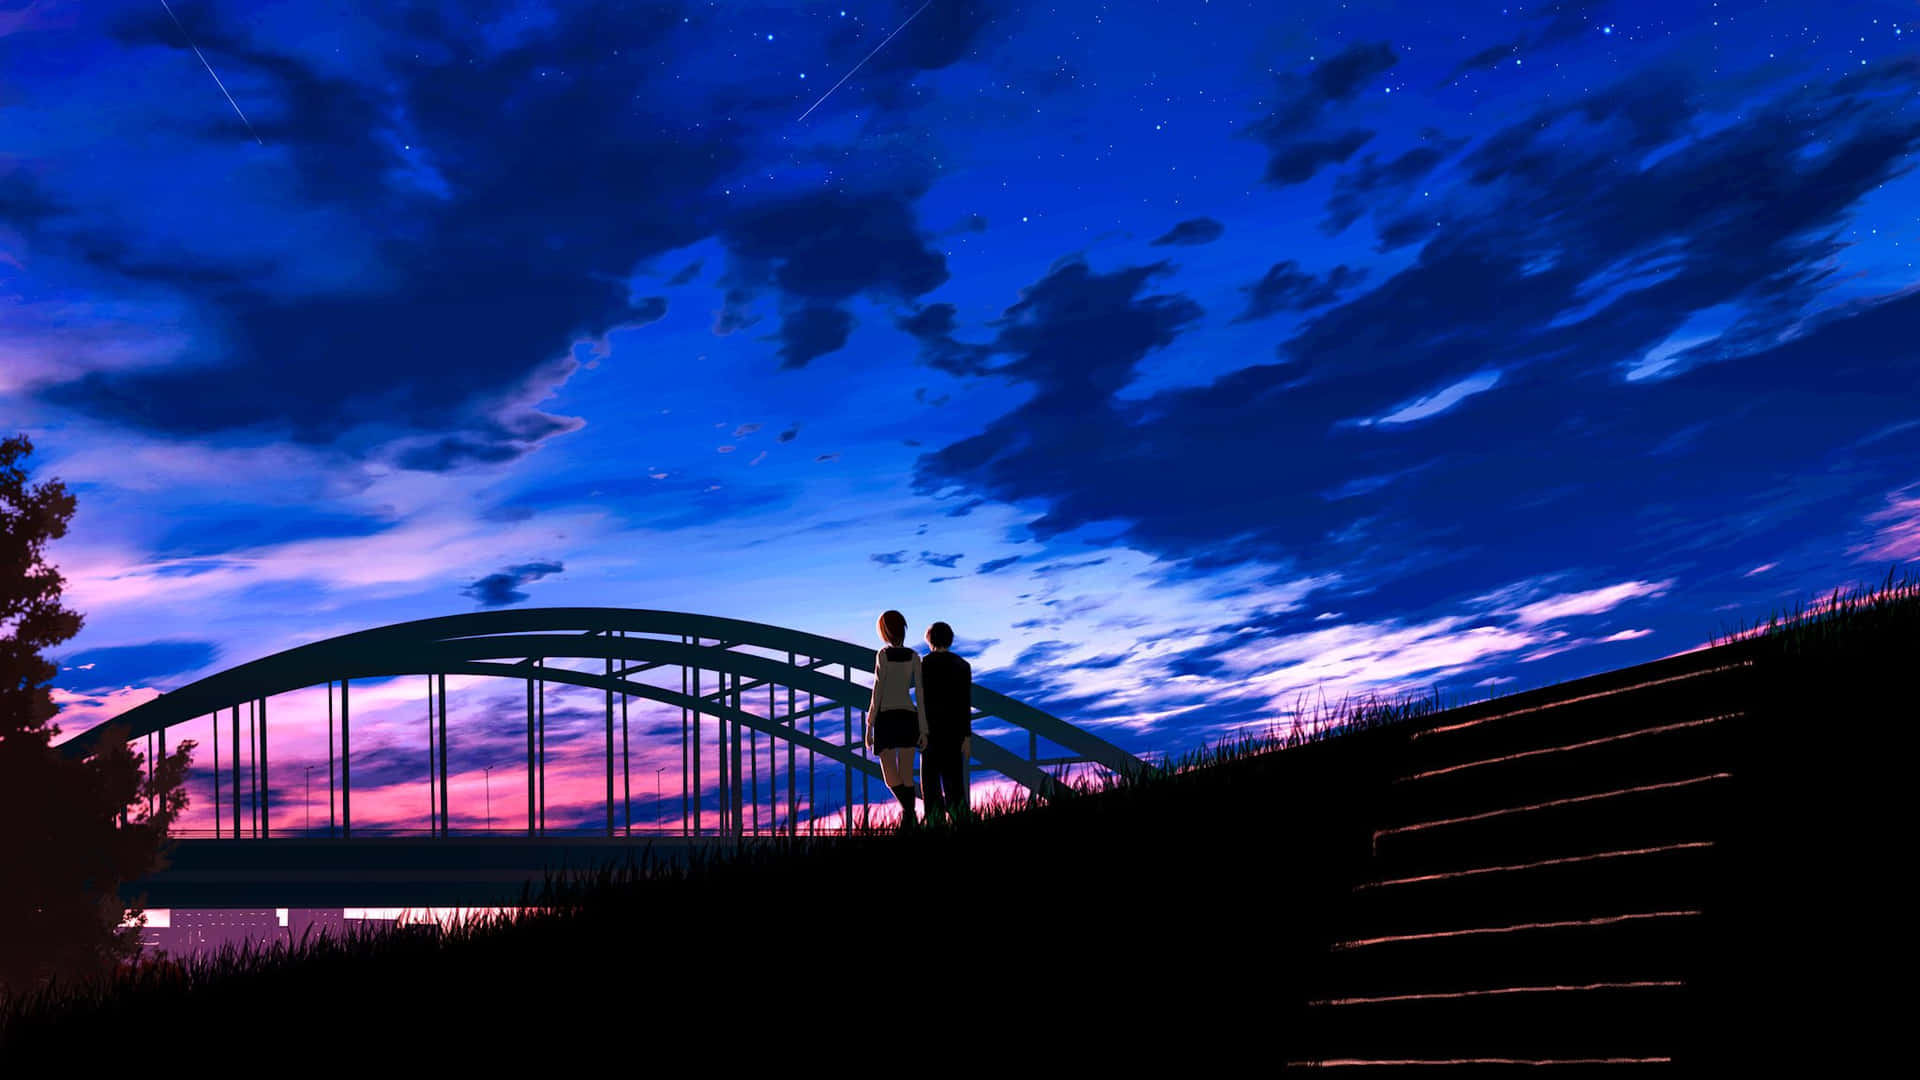 Bridge Anime Night Scenery Background